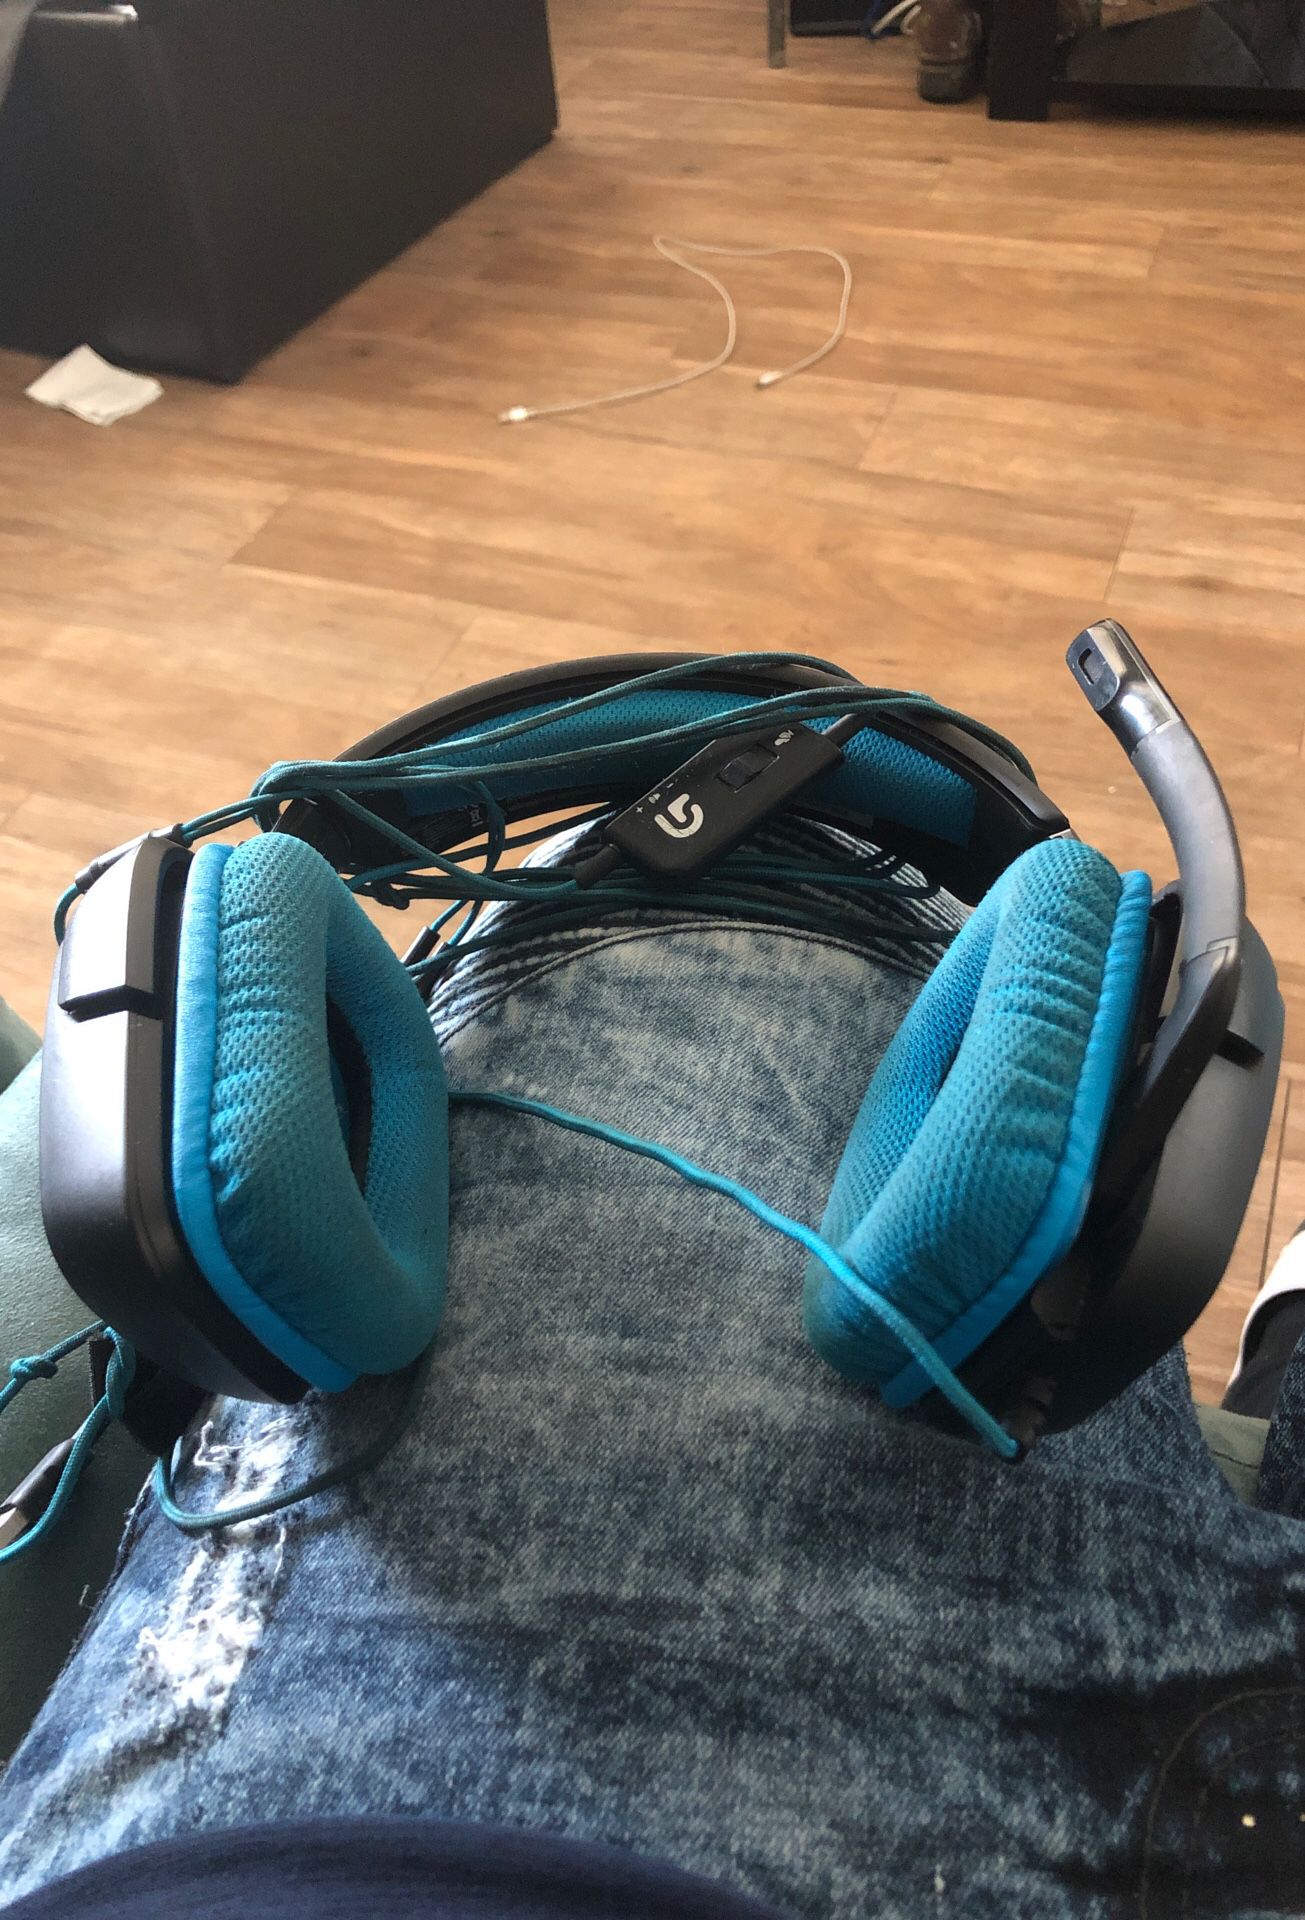 G430 gaming headphones